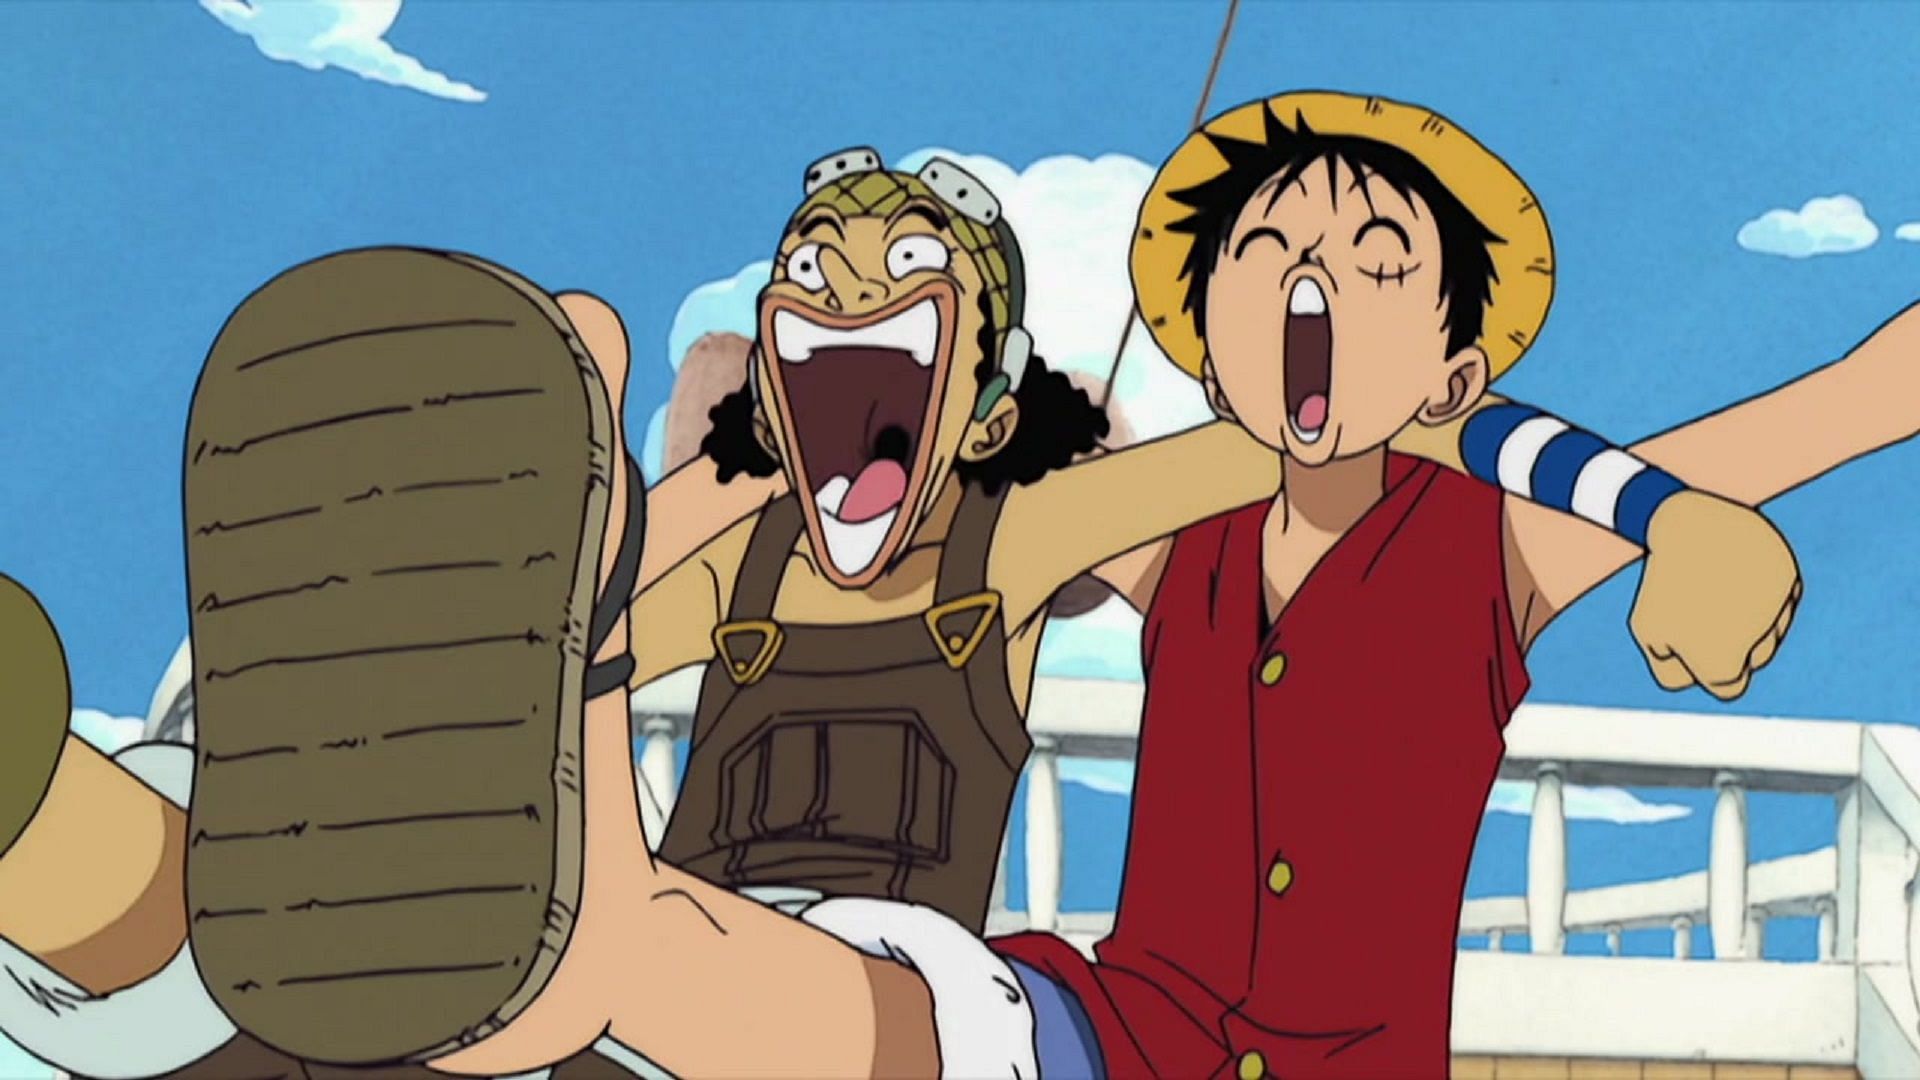 Usopp and Luffy (Image via Toei Animation, One Piece)